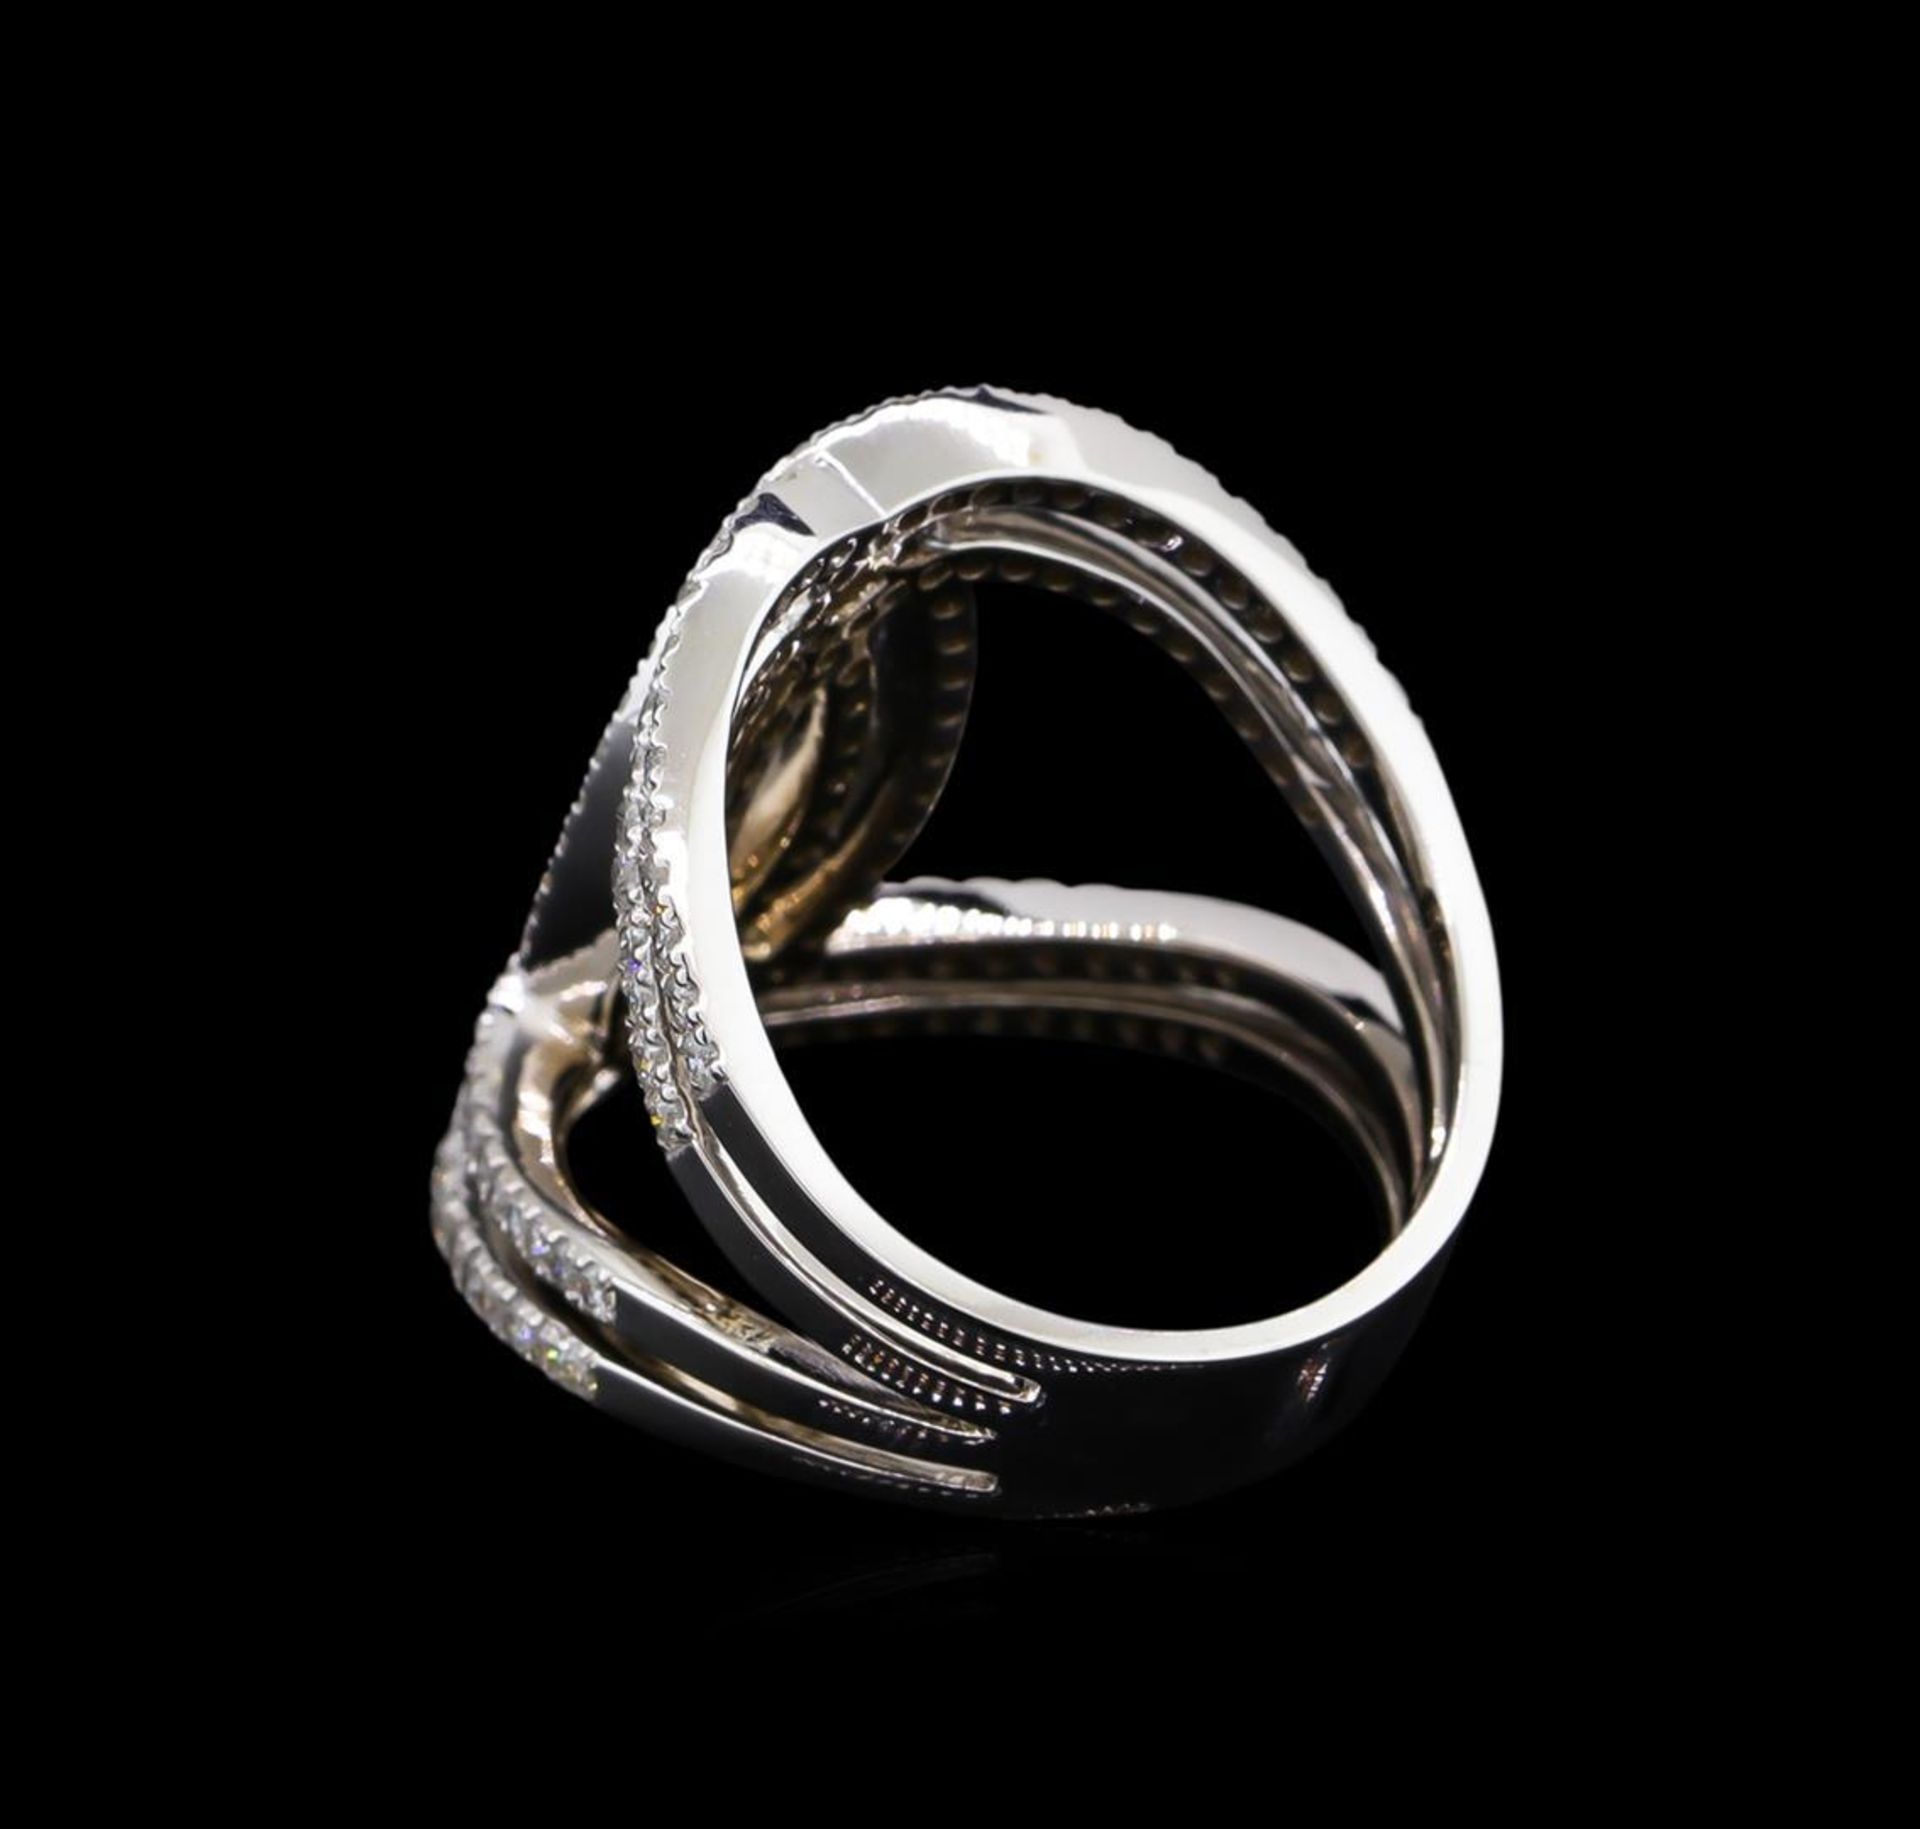 1.26 ctw Diamond Ring - 14KT White Gold - Image 3 of 5